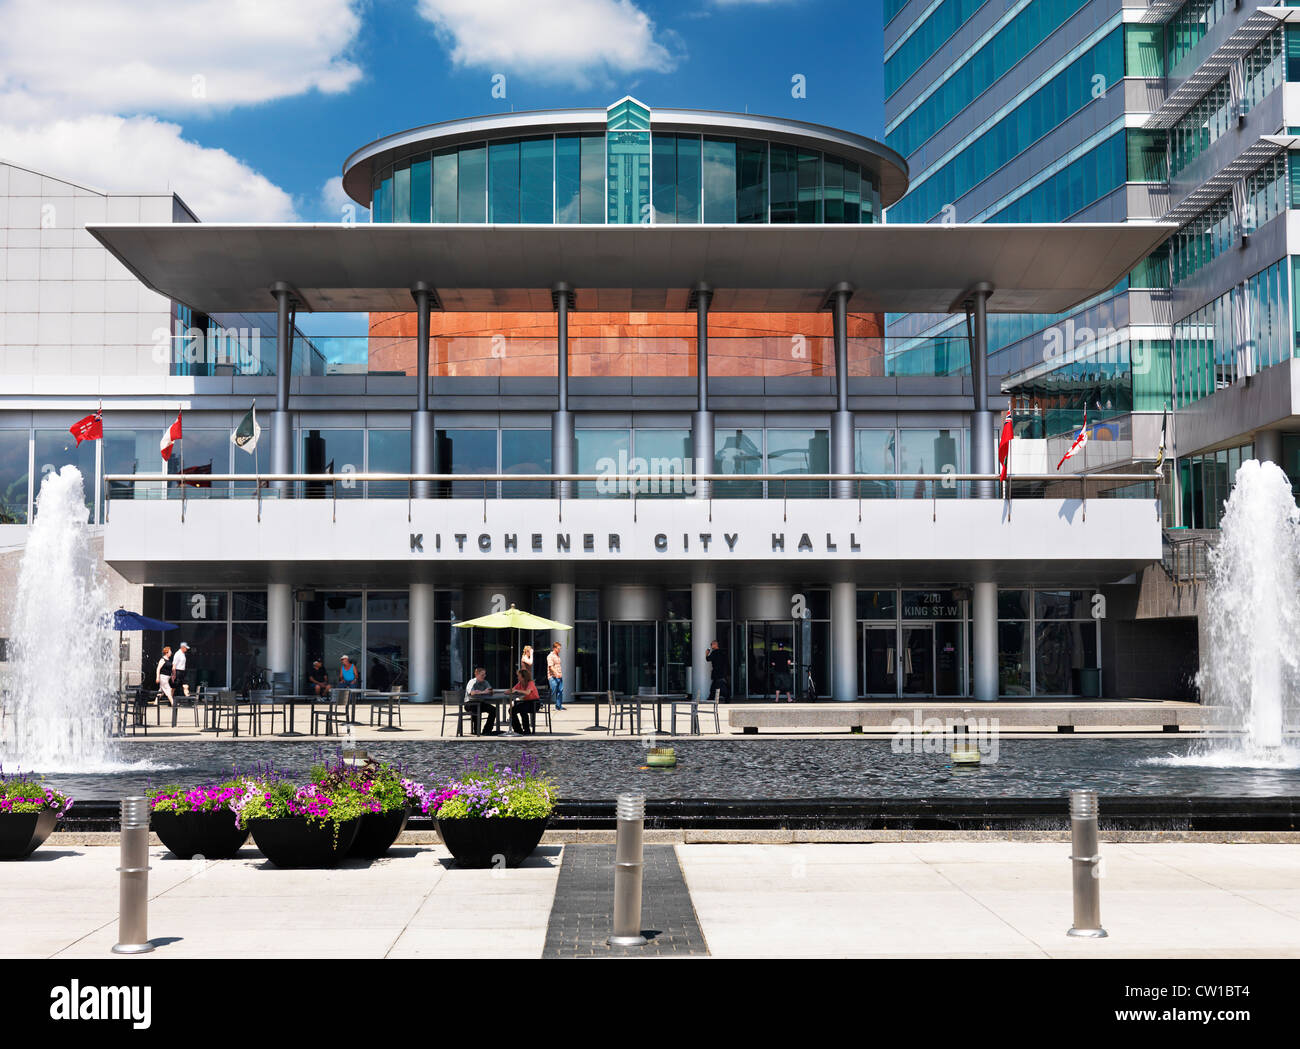 Kitchener City Hall building, Ontario, Canada 2012 Stock Photo